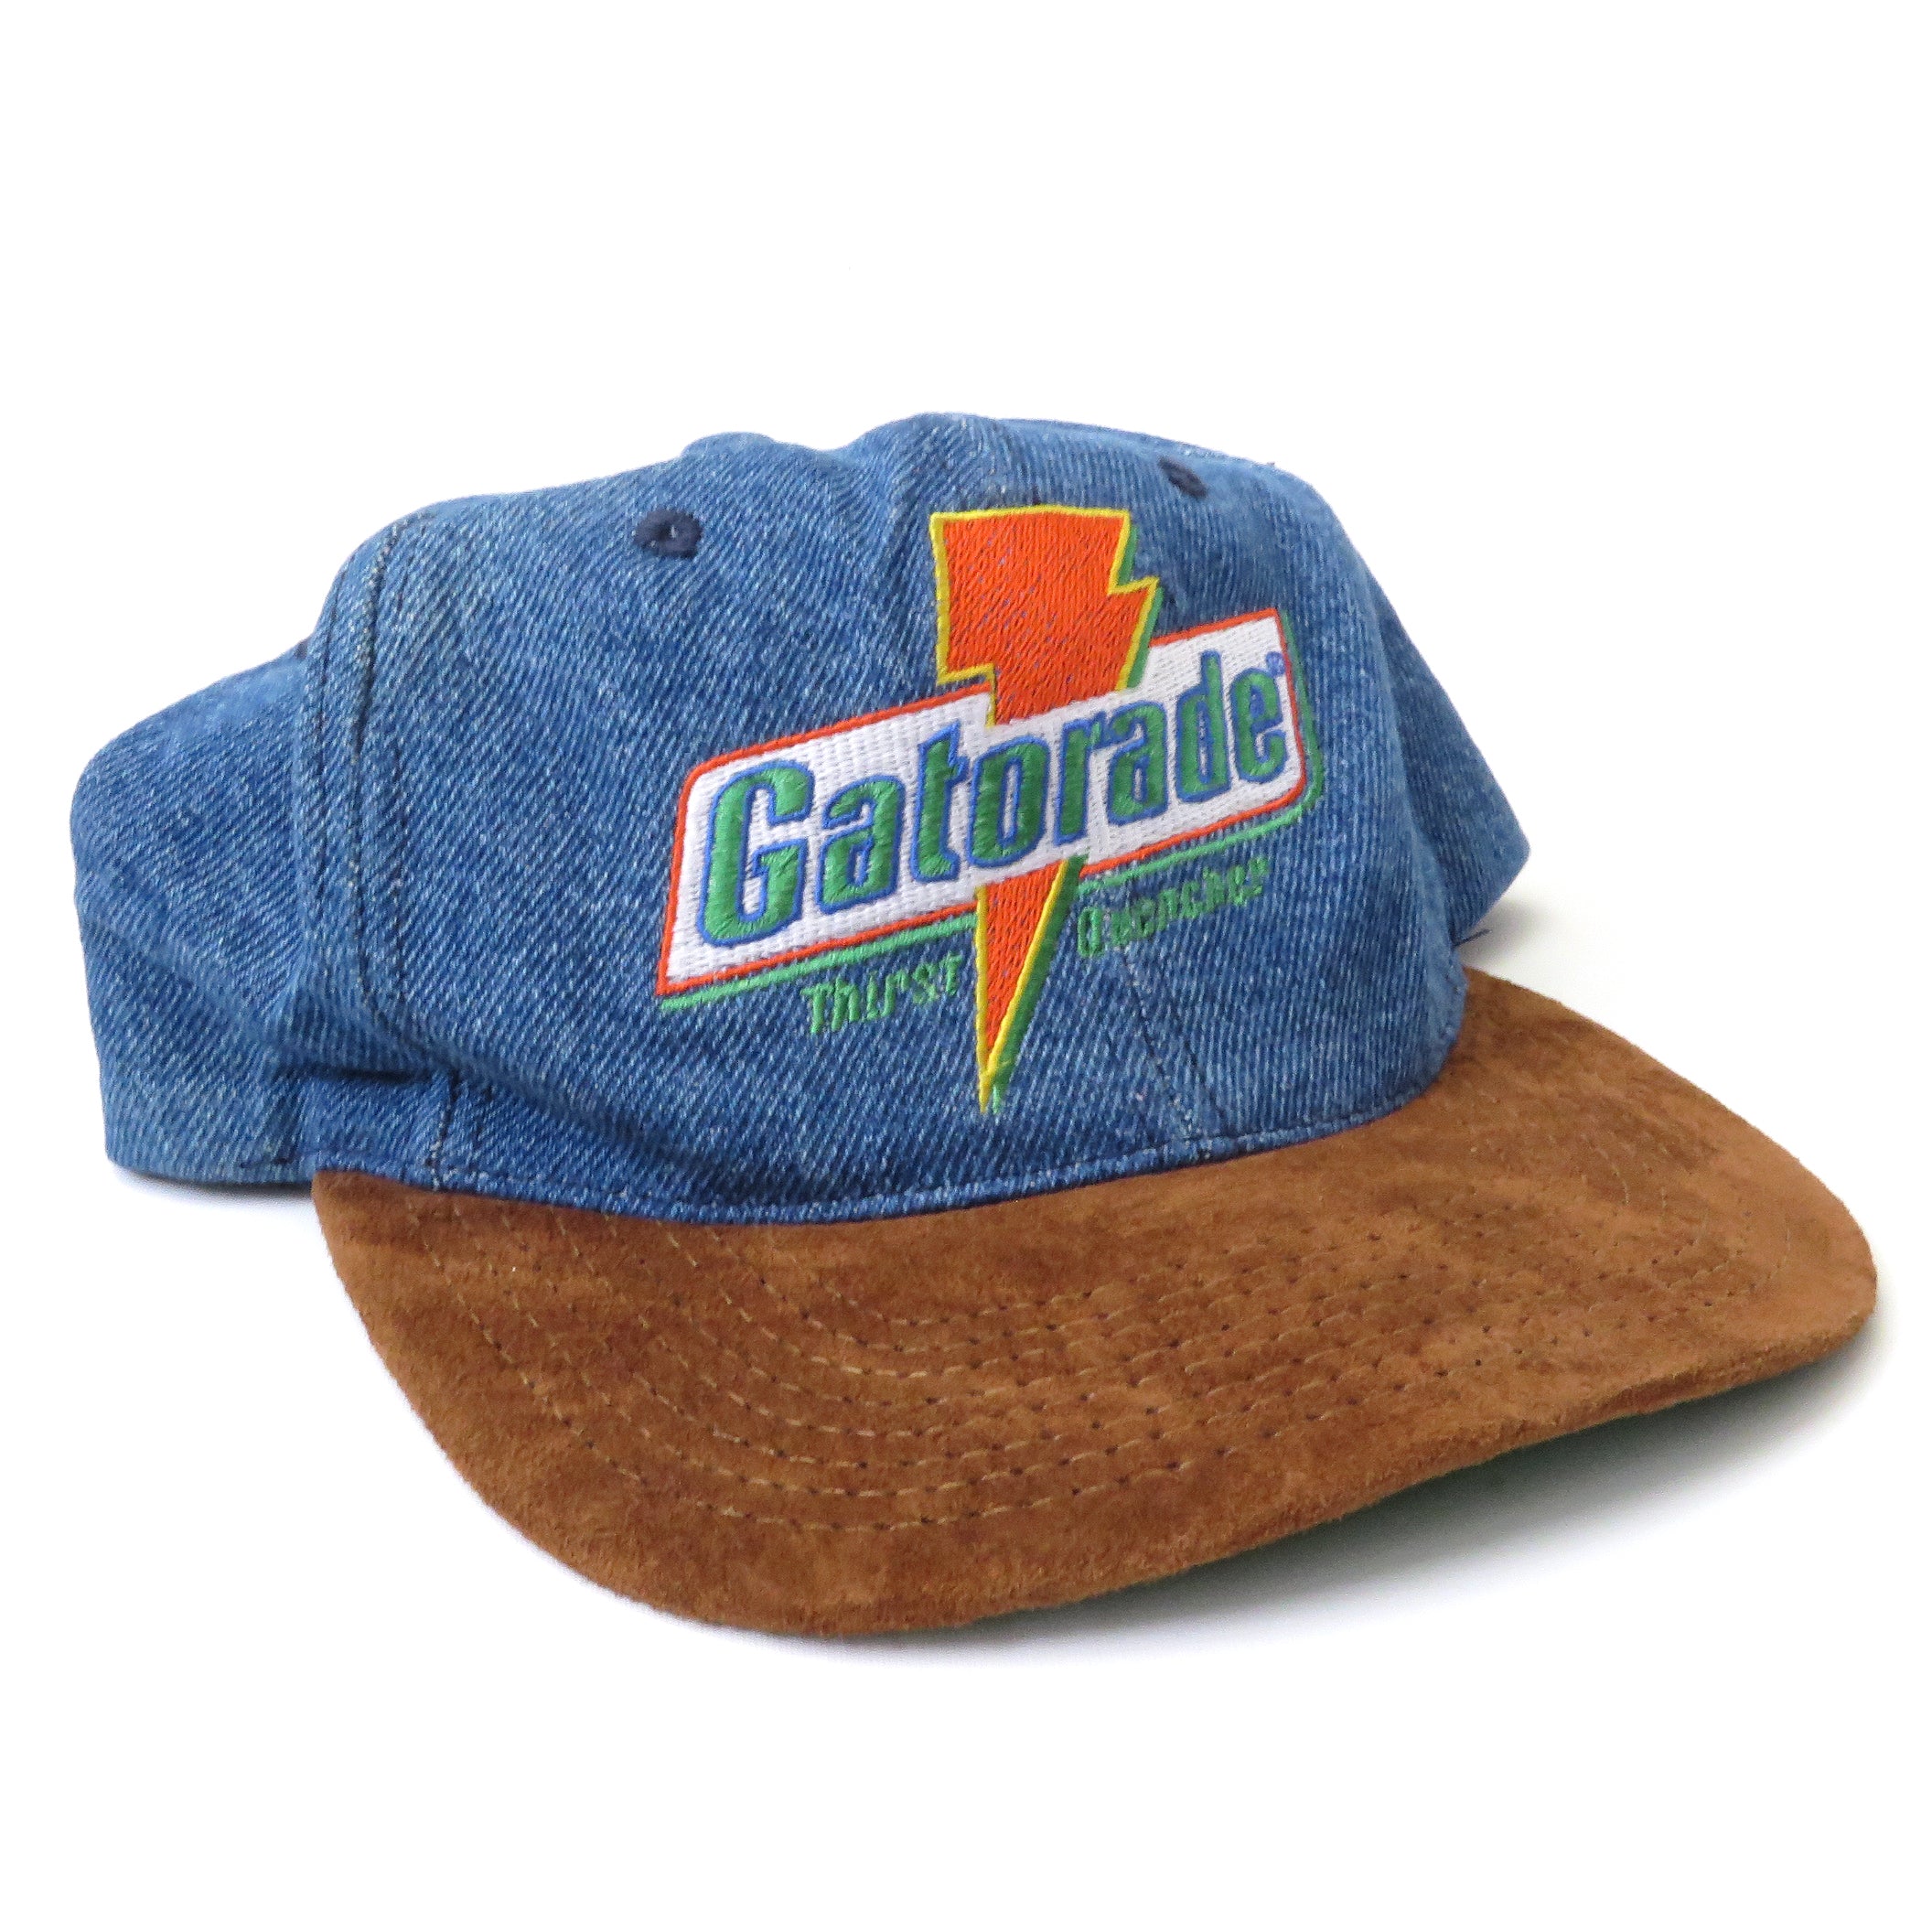 Vintage Gatorade Denim Snapback Hat